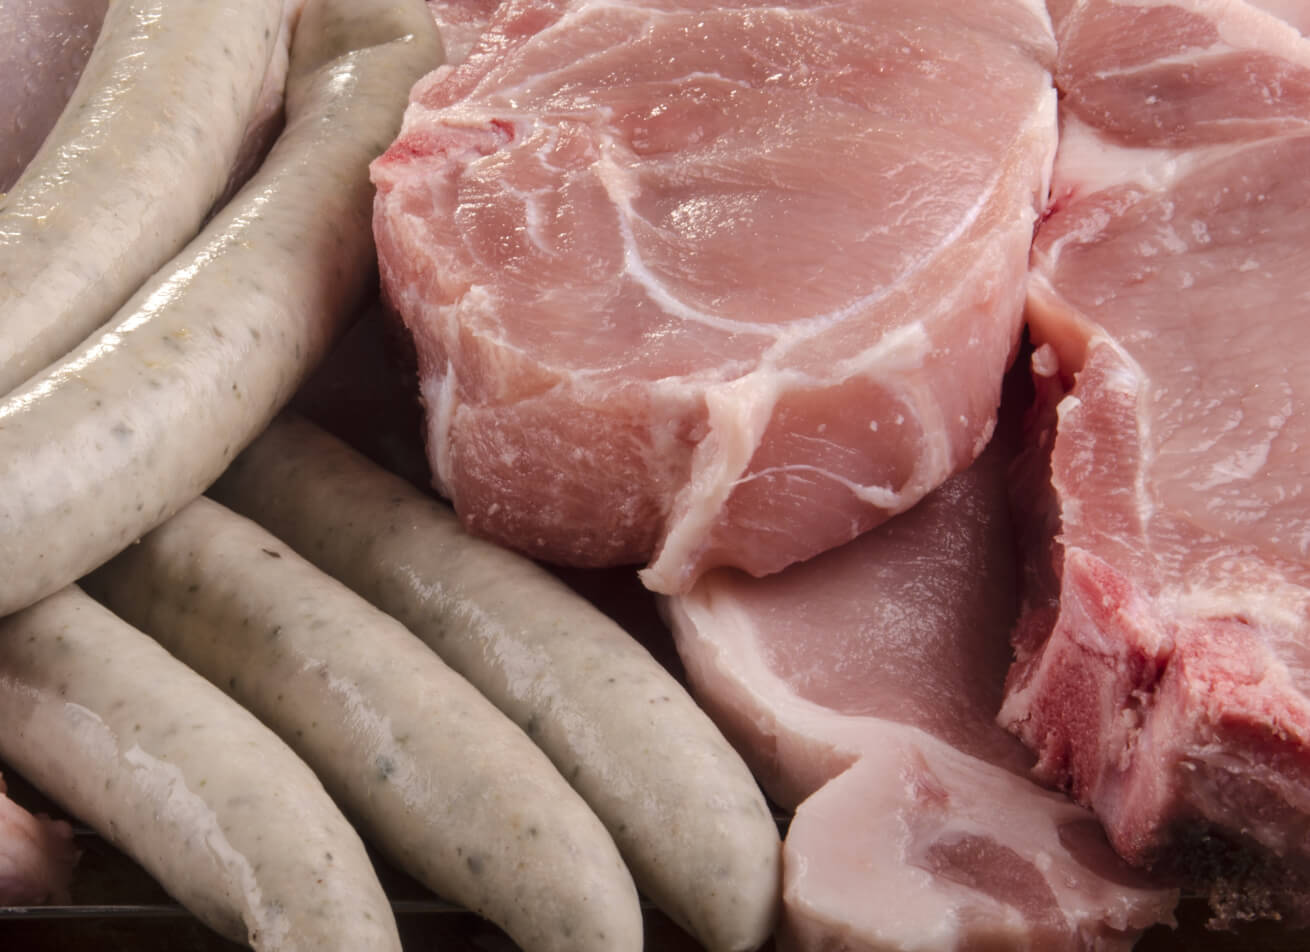 Risiko for salmonella i svinekød